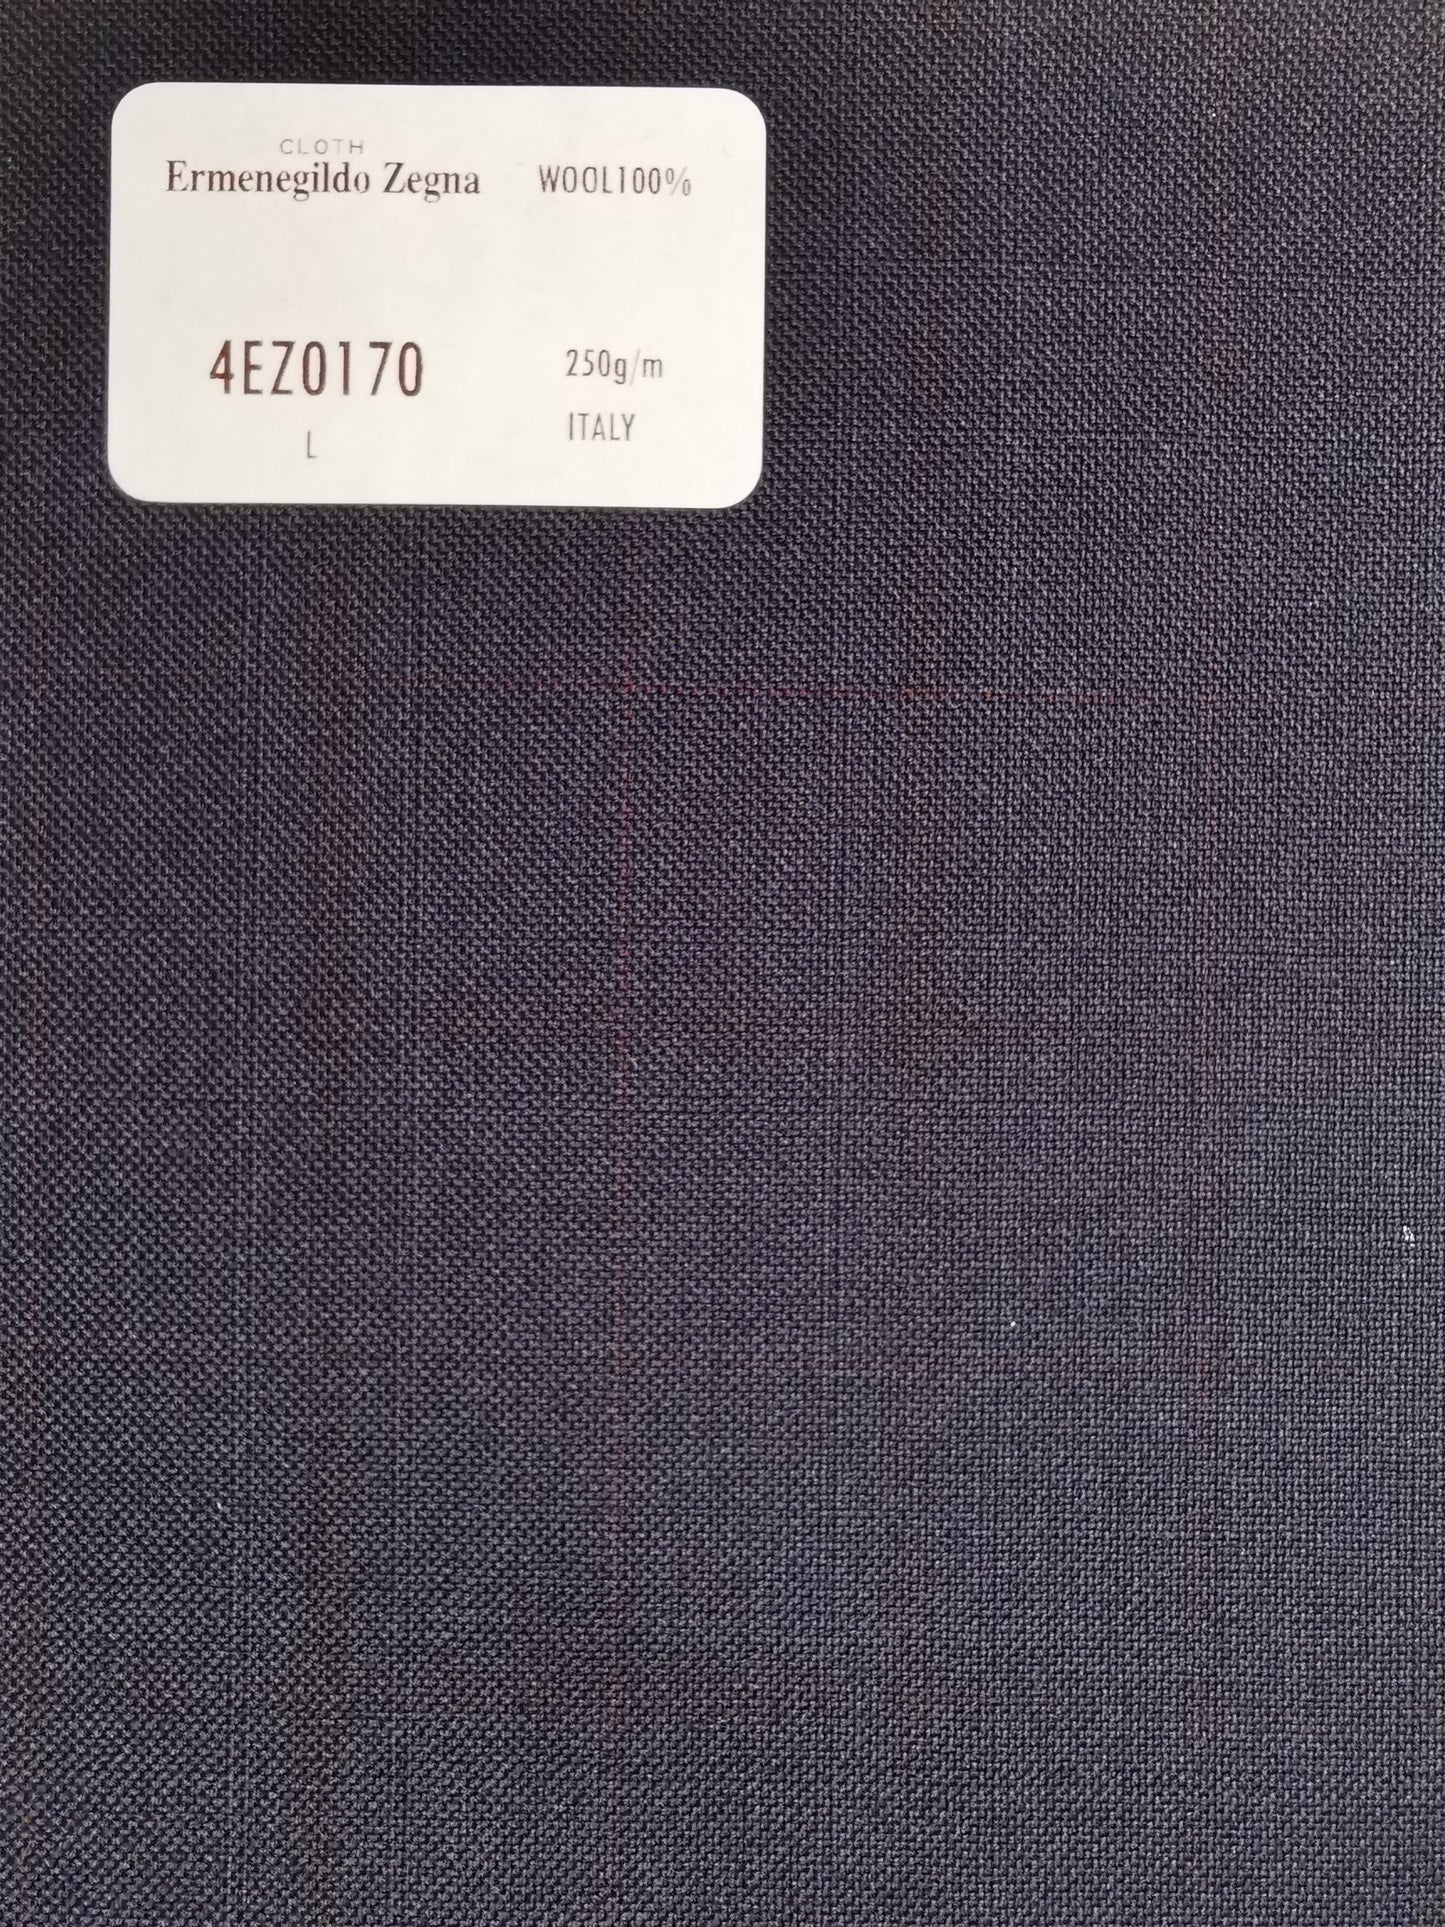 Brand : Ermenegildo Zegna Textile ID : 4EZ0170